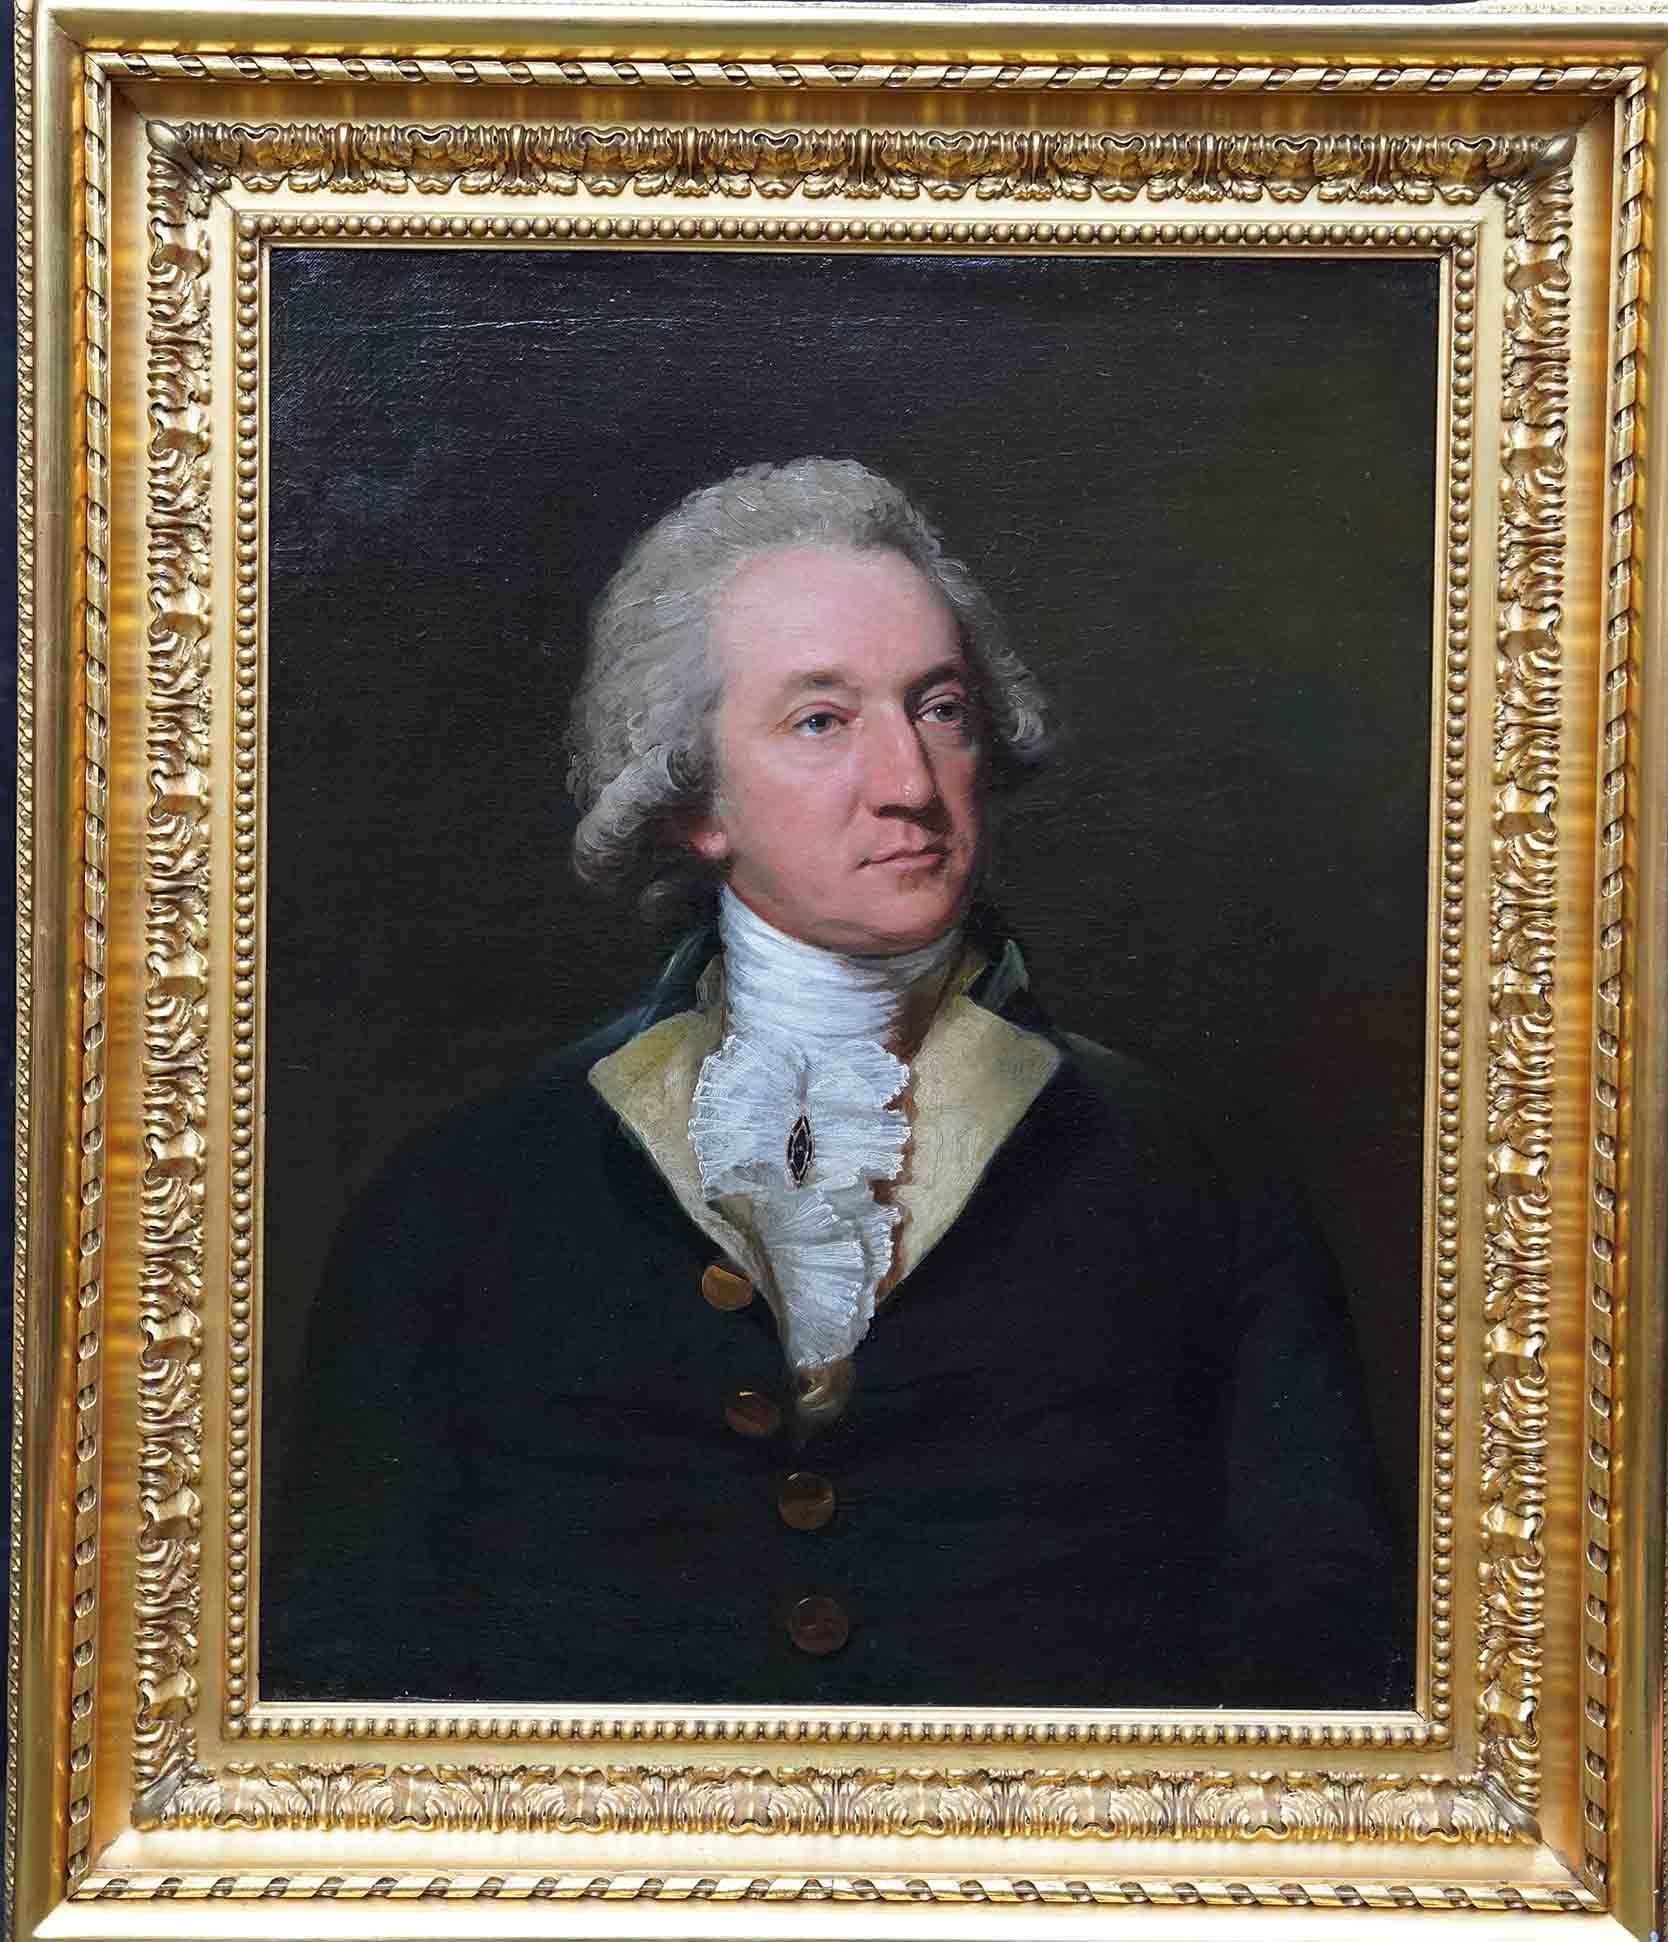 Lemuel Francis Abbott Portrait Painting - Portrait of a Gentleman - British 18th Century Old Master art  oil painting